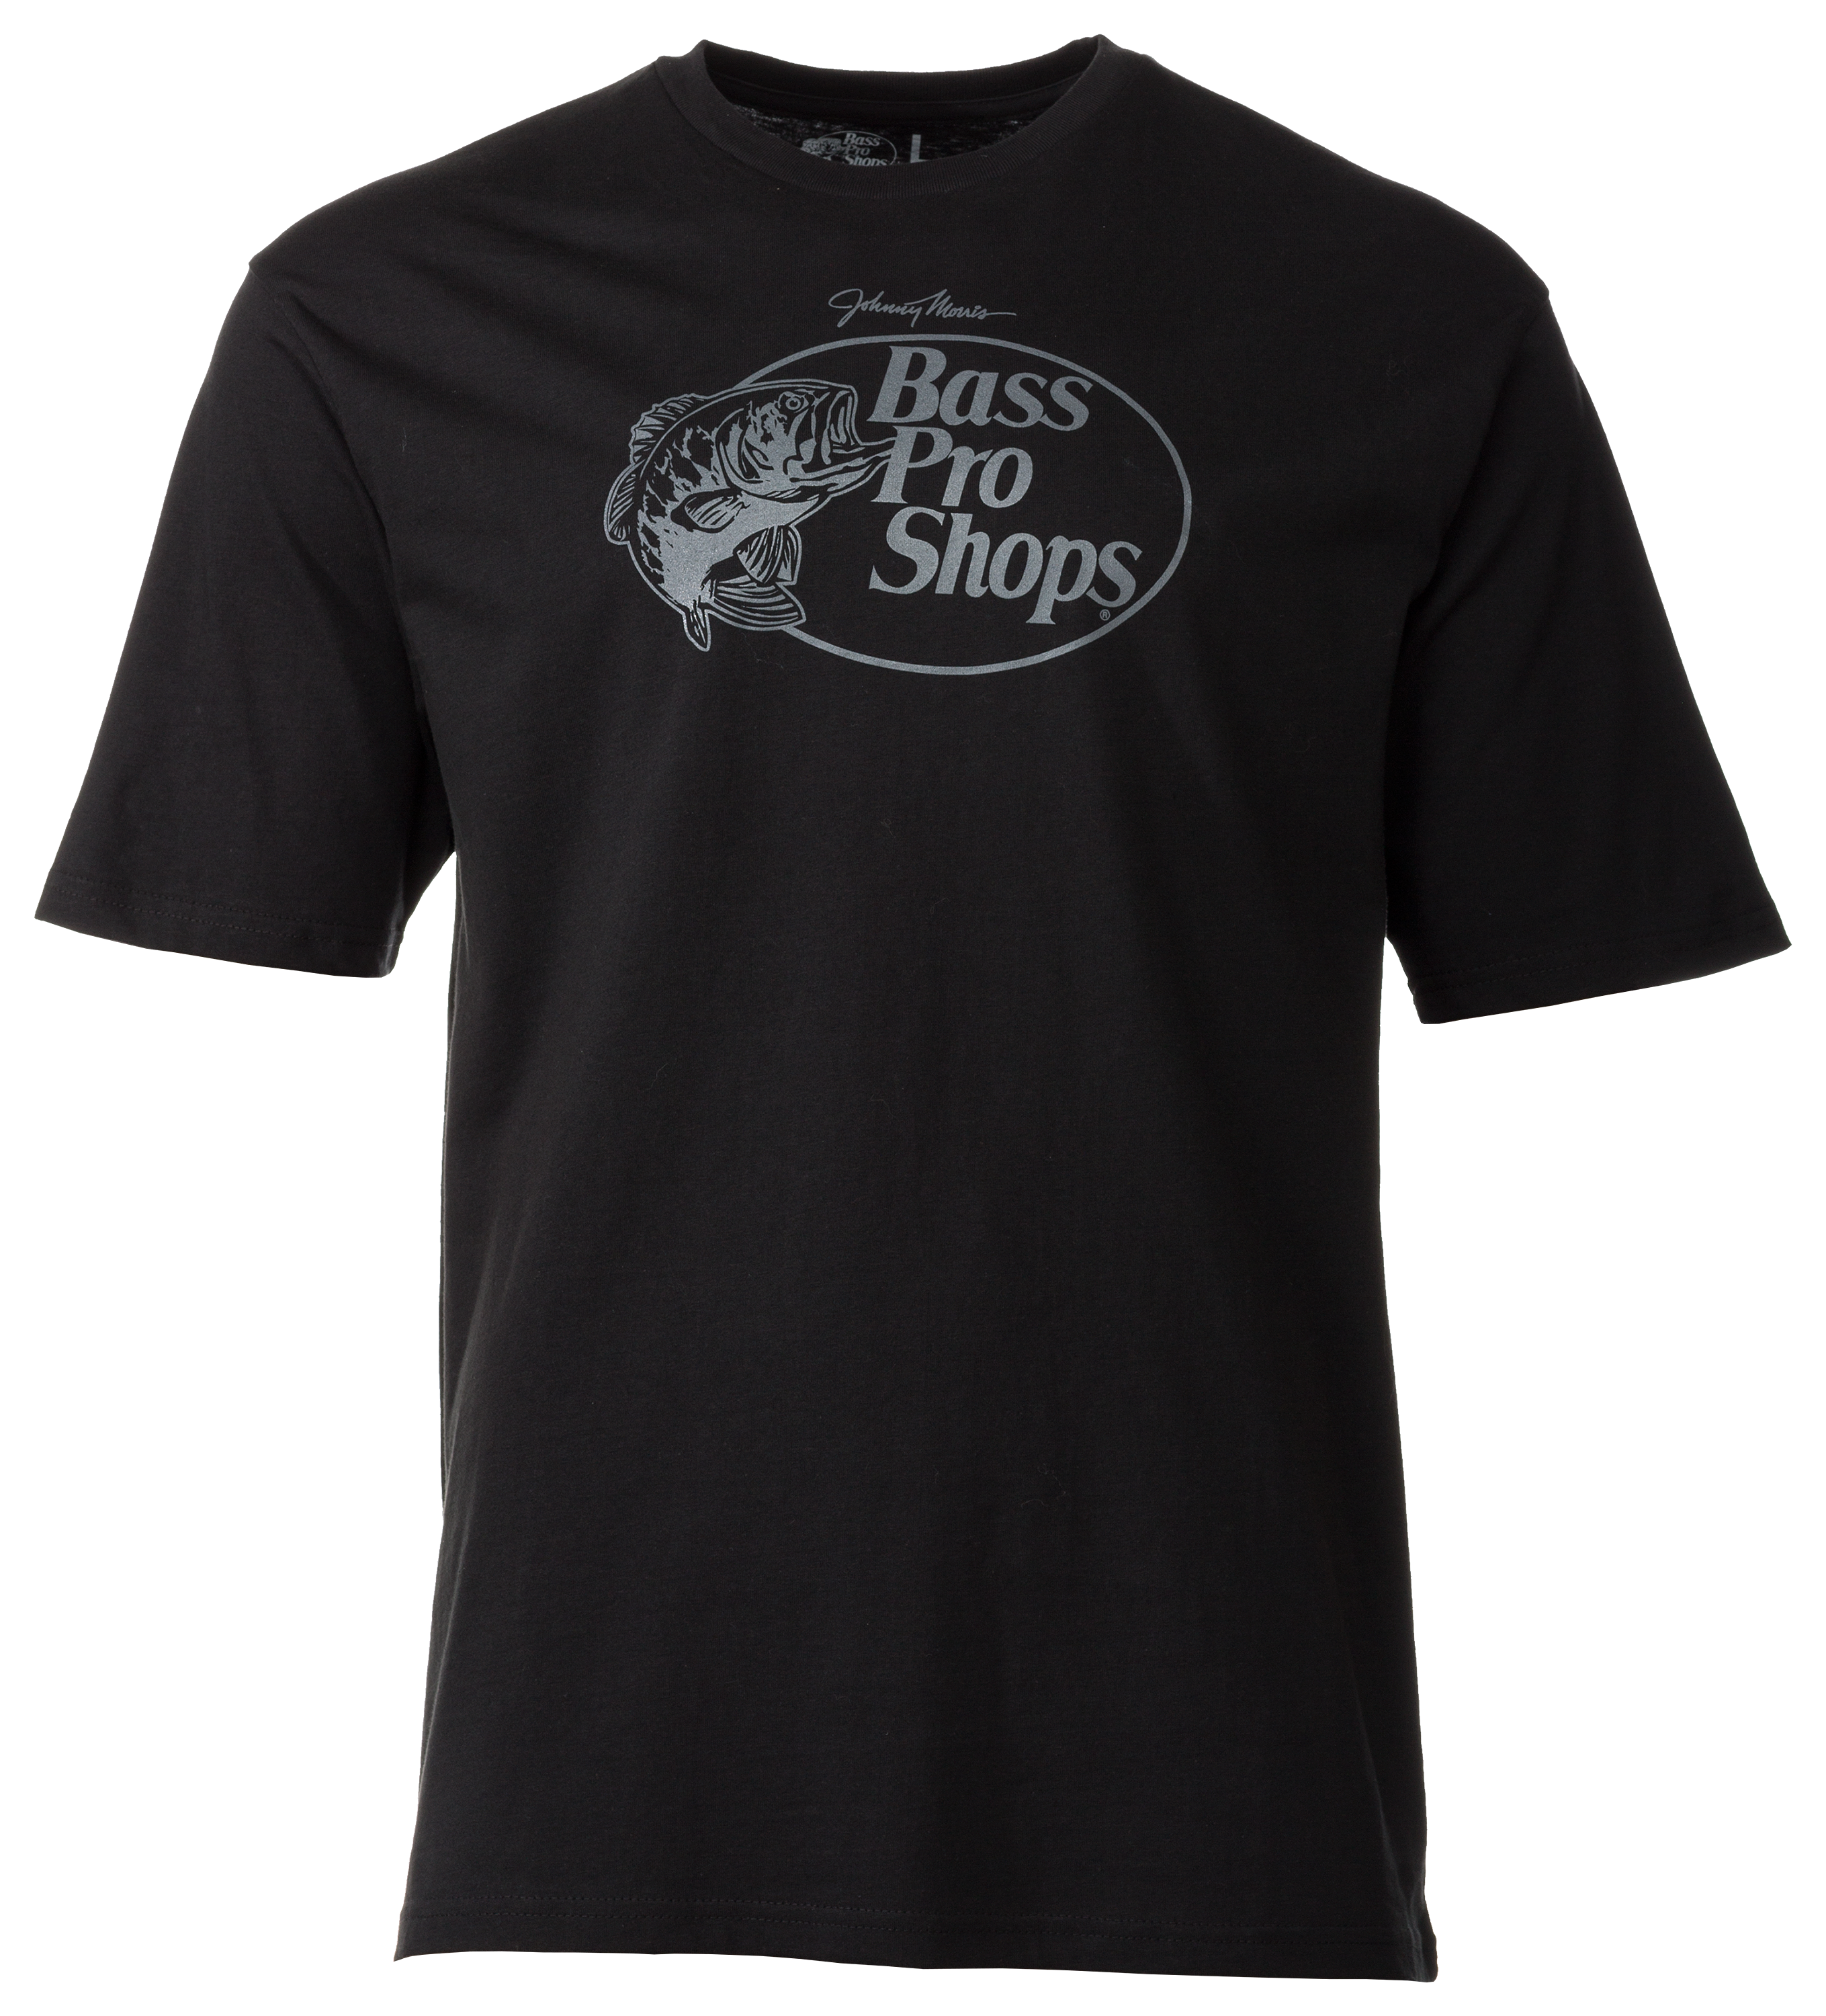 Bass Pro Shops Original Logo 2.0 Short-Sleeve T-Shirt for Men - Black - M